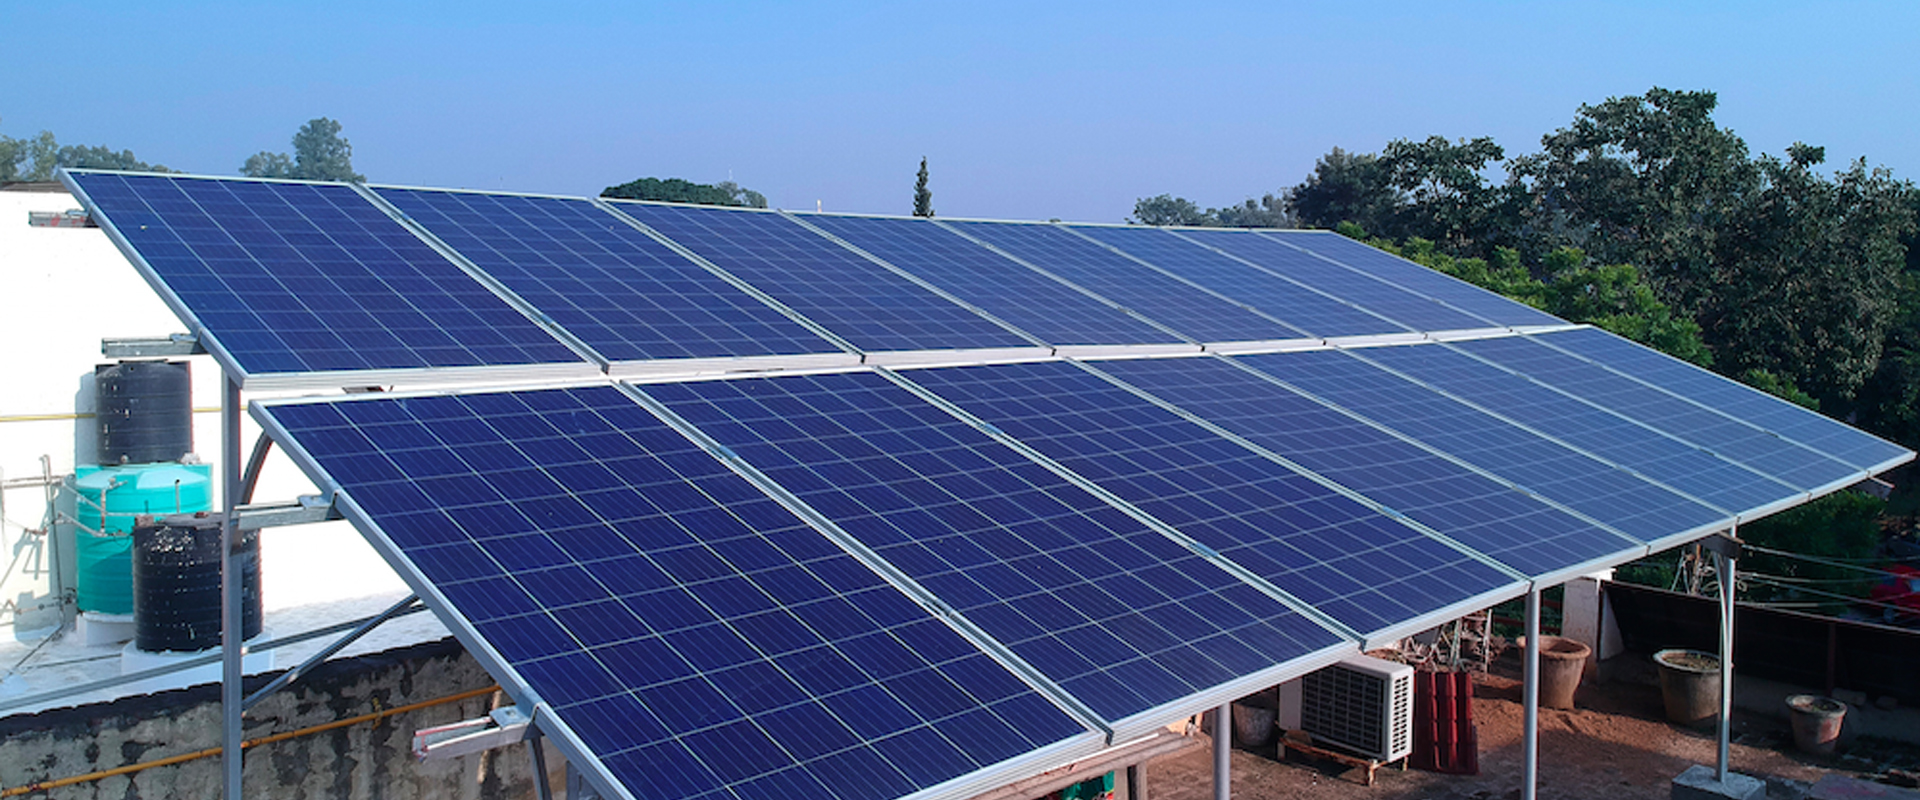 Hartek Solar - Leading Rooftop Solar solutions provider in India